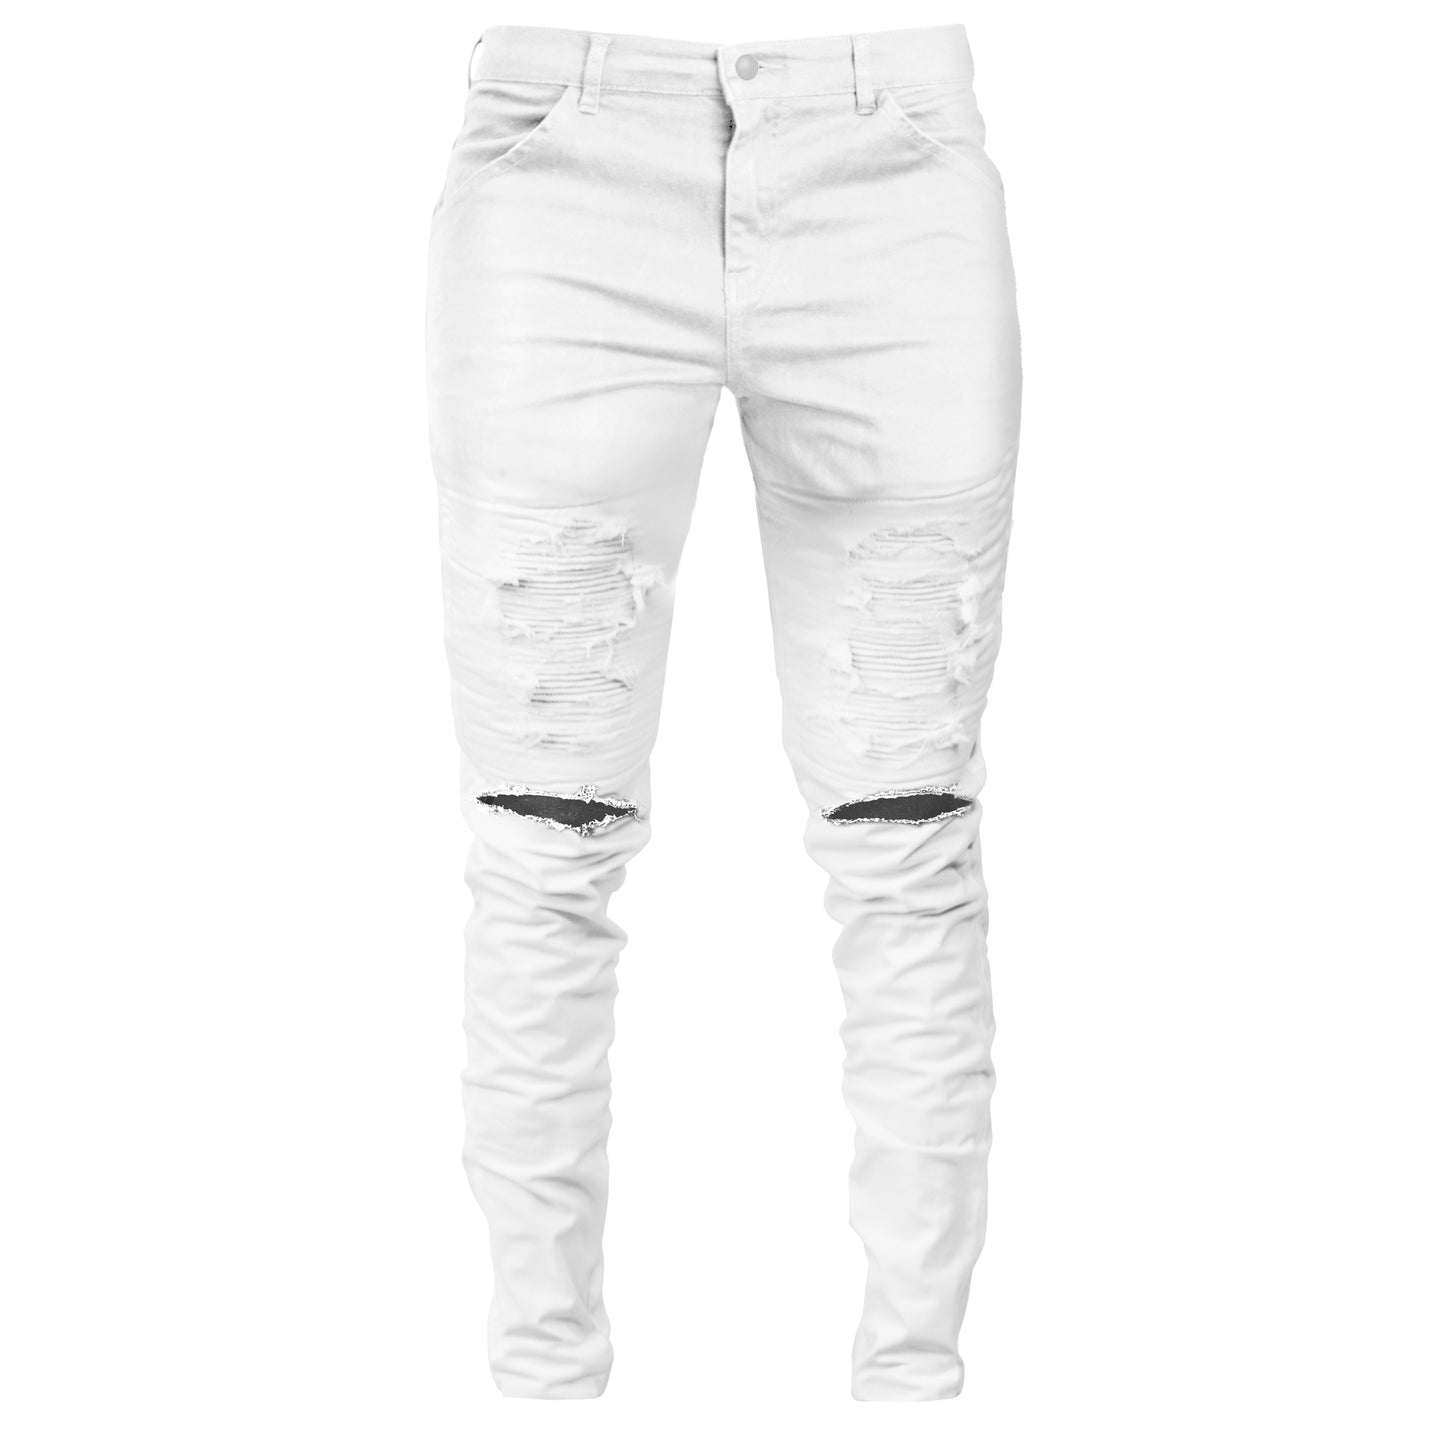 Distressed Biker Knee Slit Jeans 3.0 : White